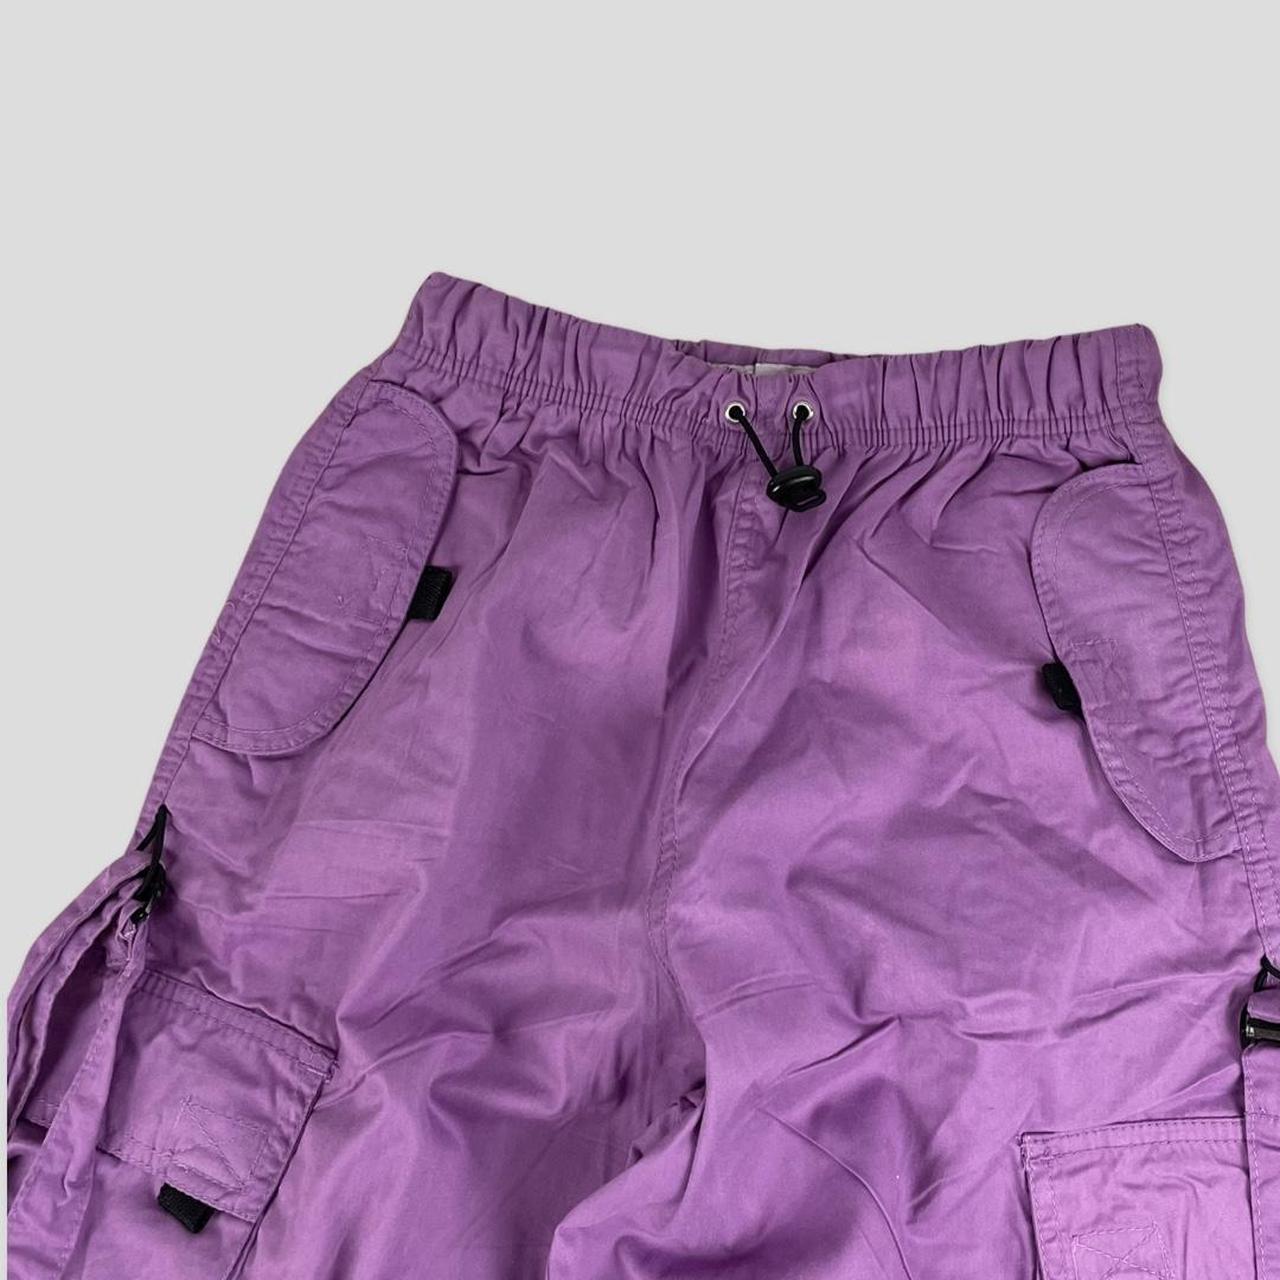 Criminal Damage Purple Cargo Pant